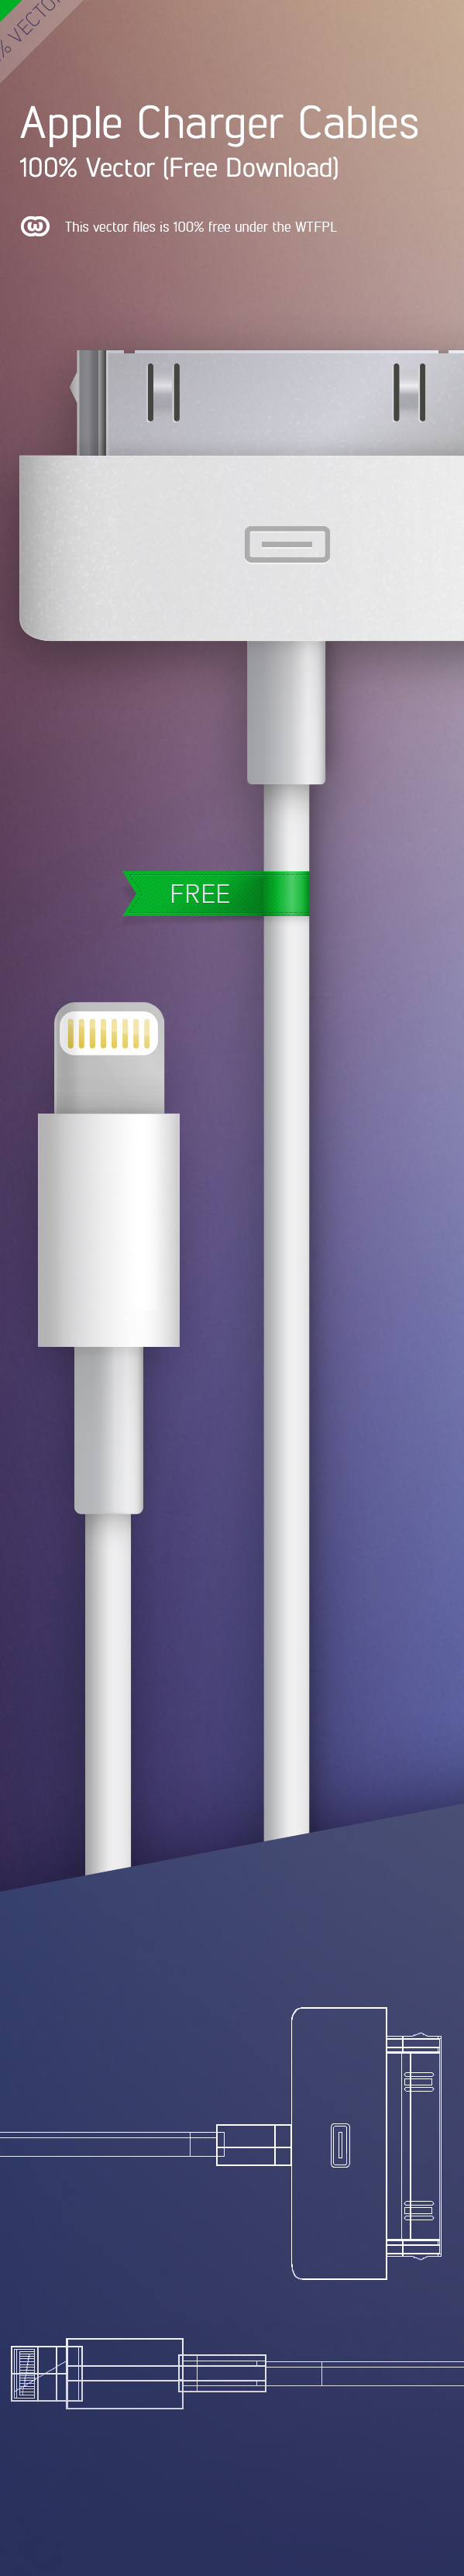 UI design apple Cable free lightning 30pin vector ai Illustrator art Icon download downloading freemium